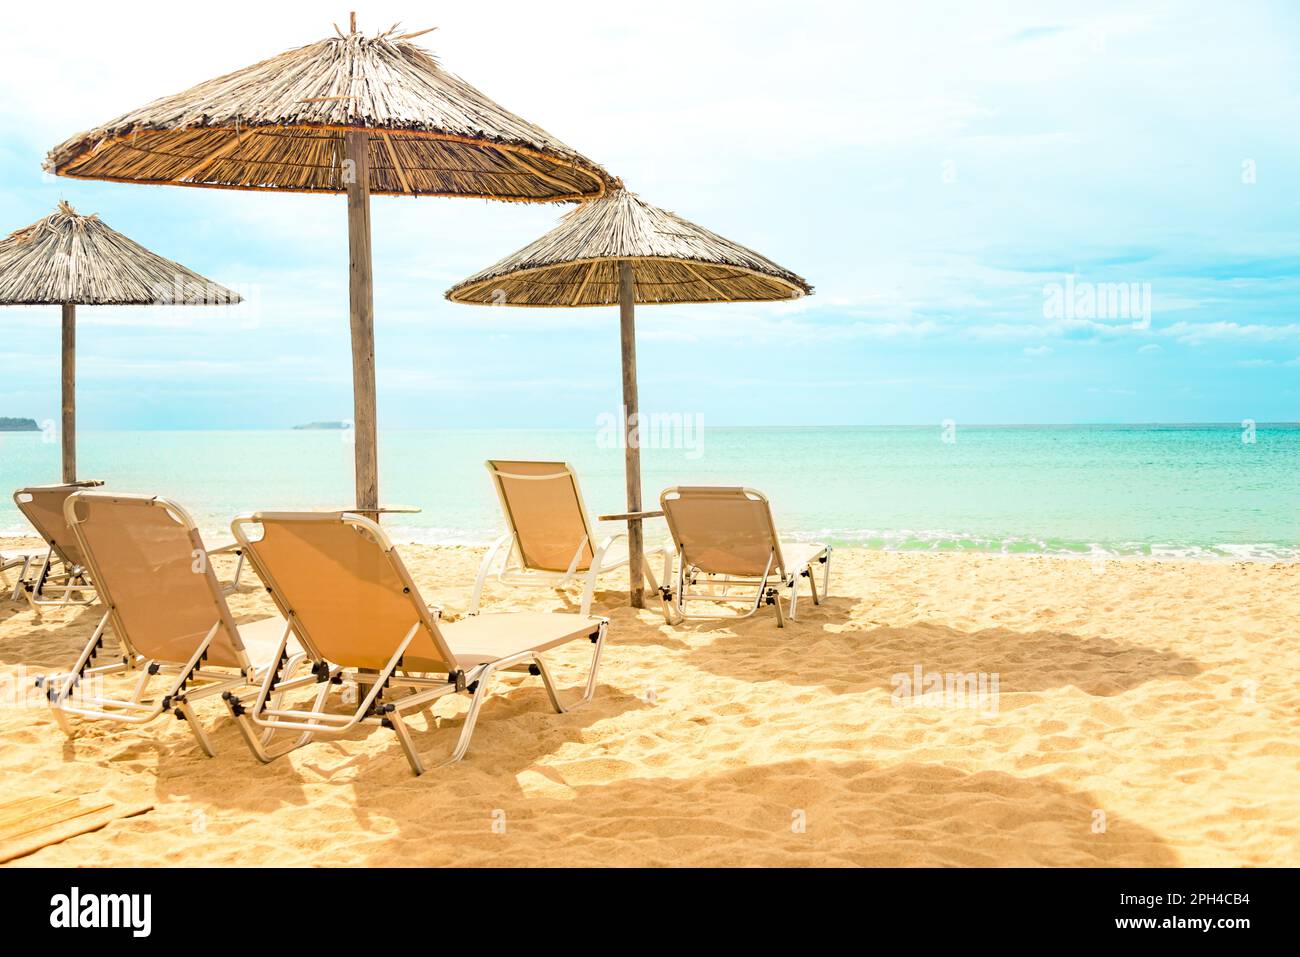 Straw umbrellas and sunbeds on a sunny golden beach seashore. Stock Photo